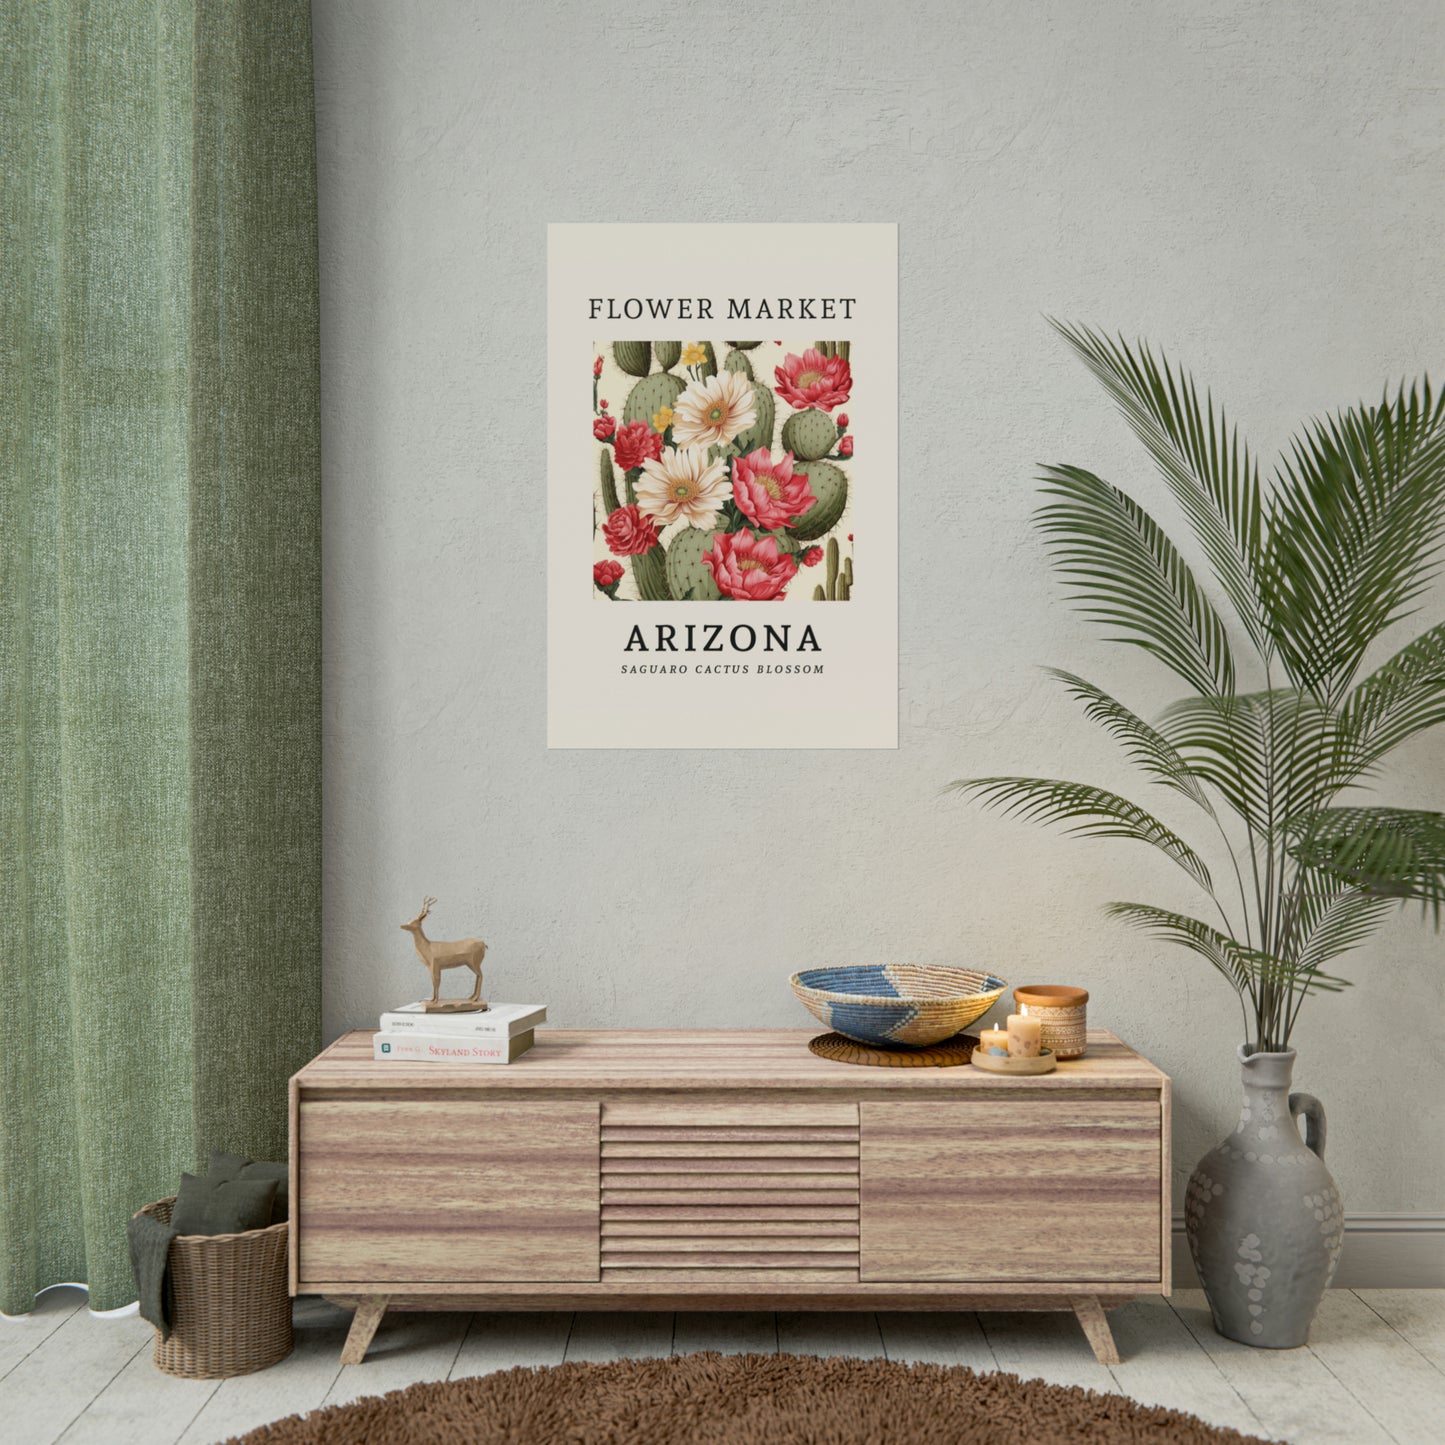 ARIZONA FLOWER MARKET Poster Saguaro Cactus Blossom Print